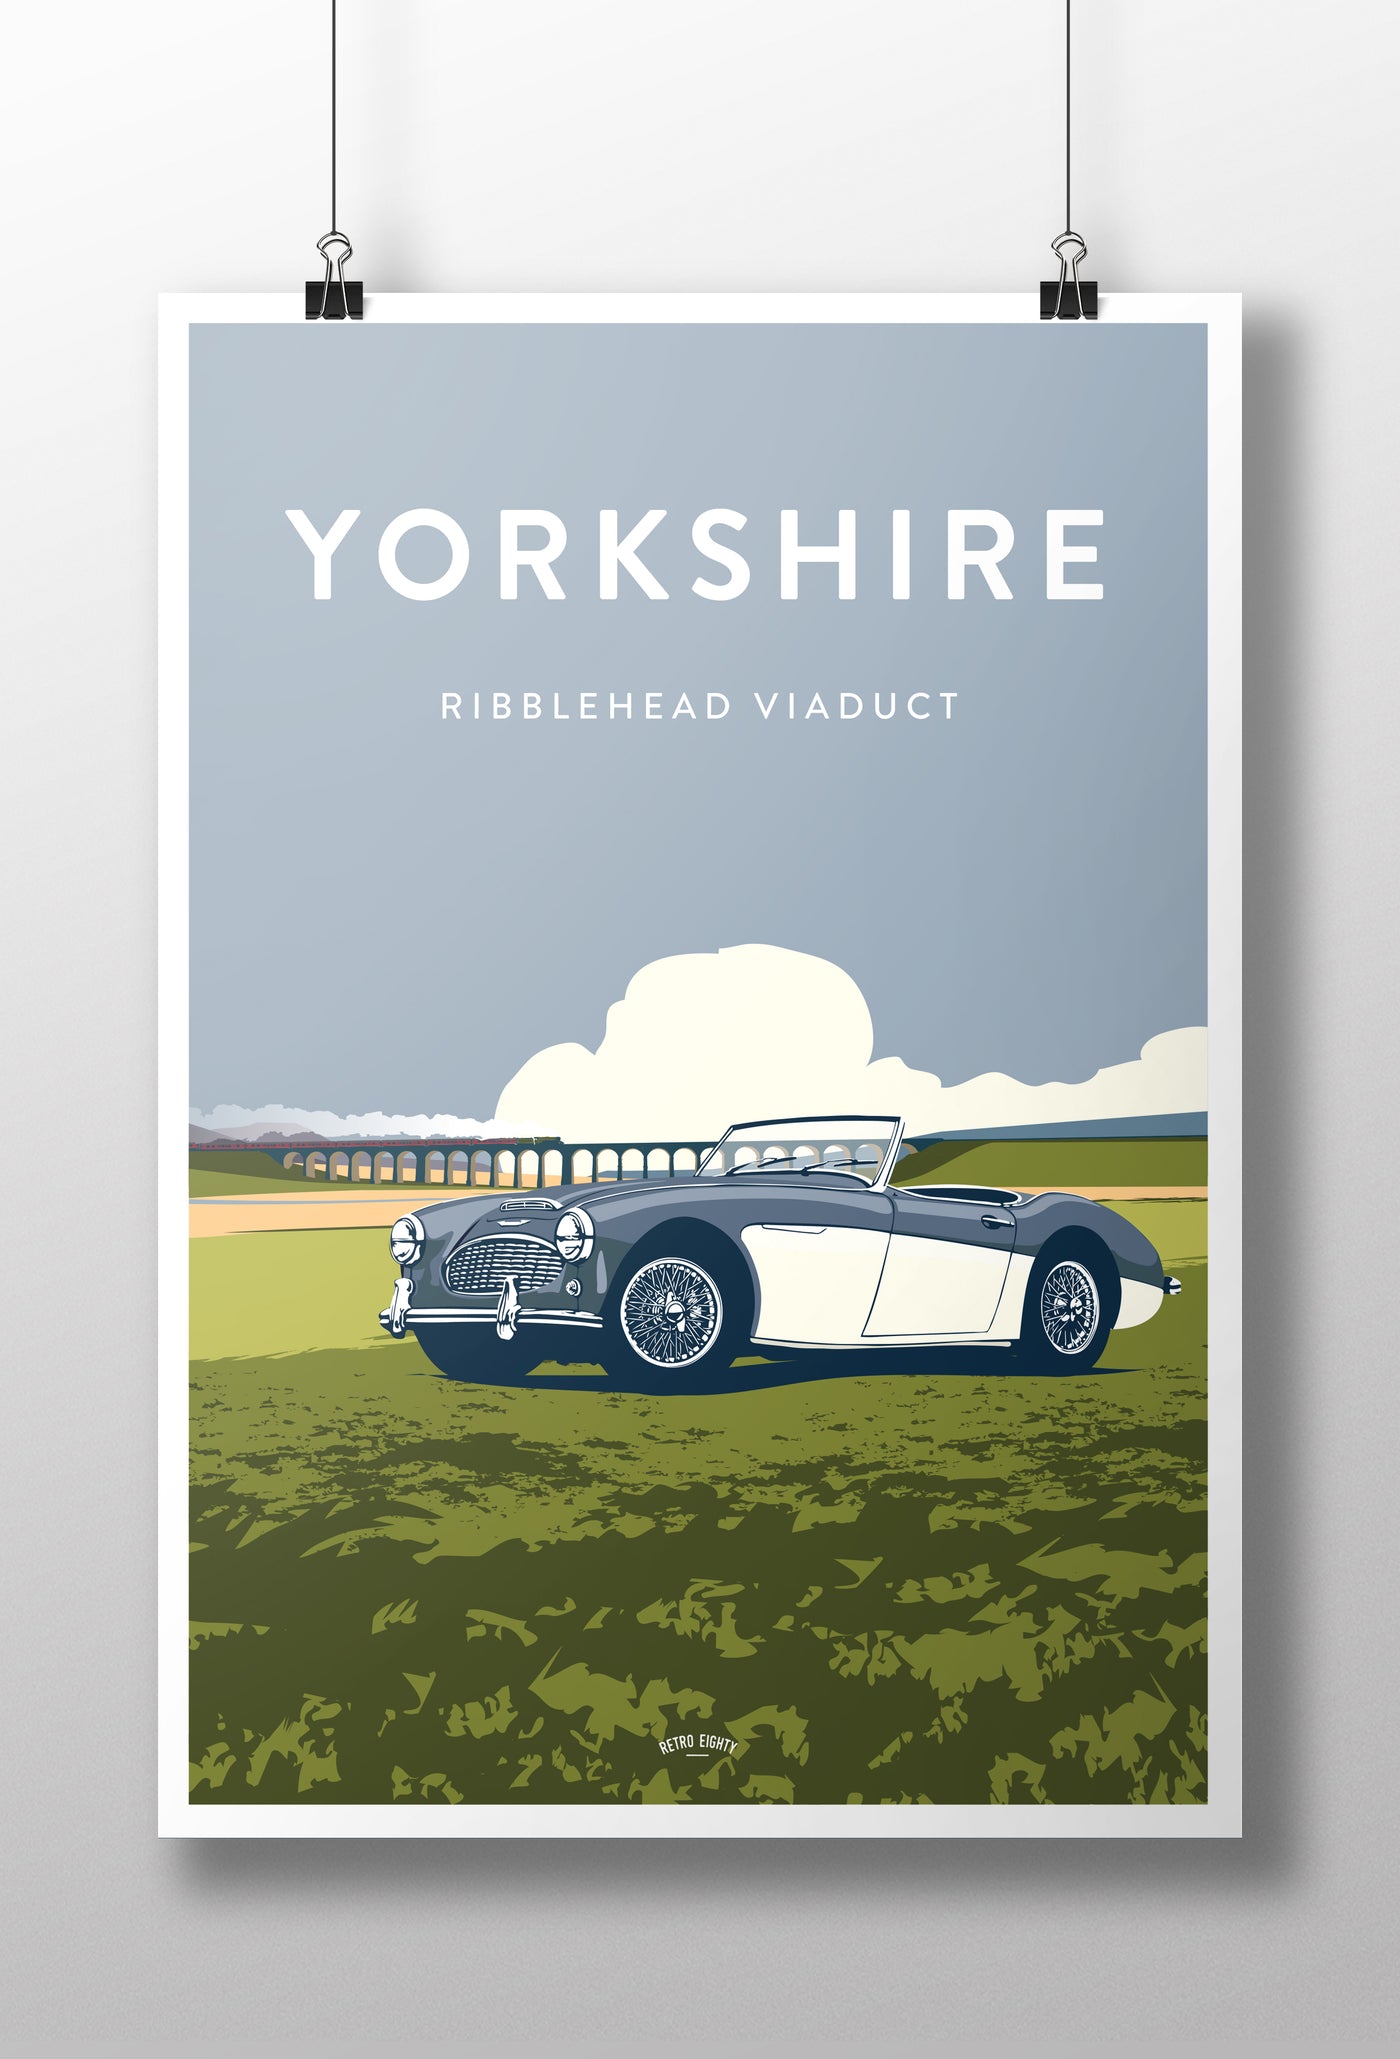 'Yorkshire' Big Healey Prints